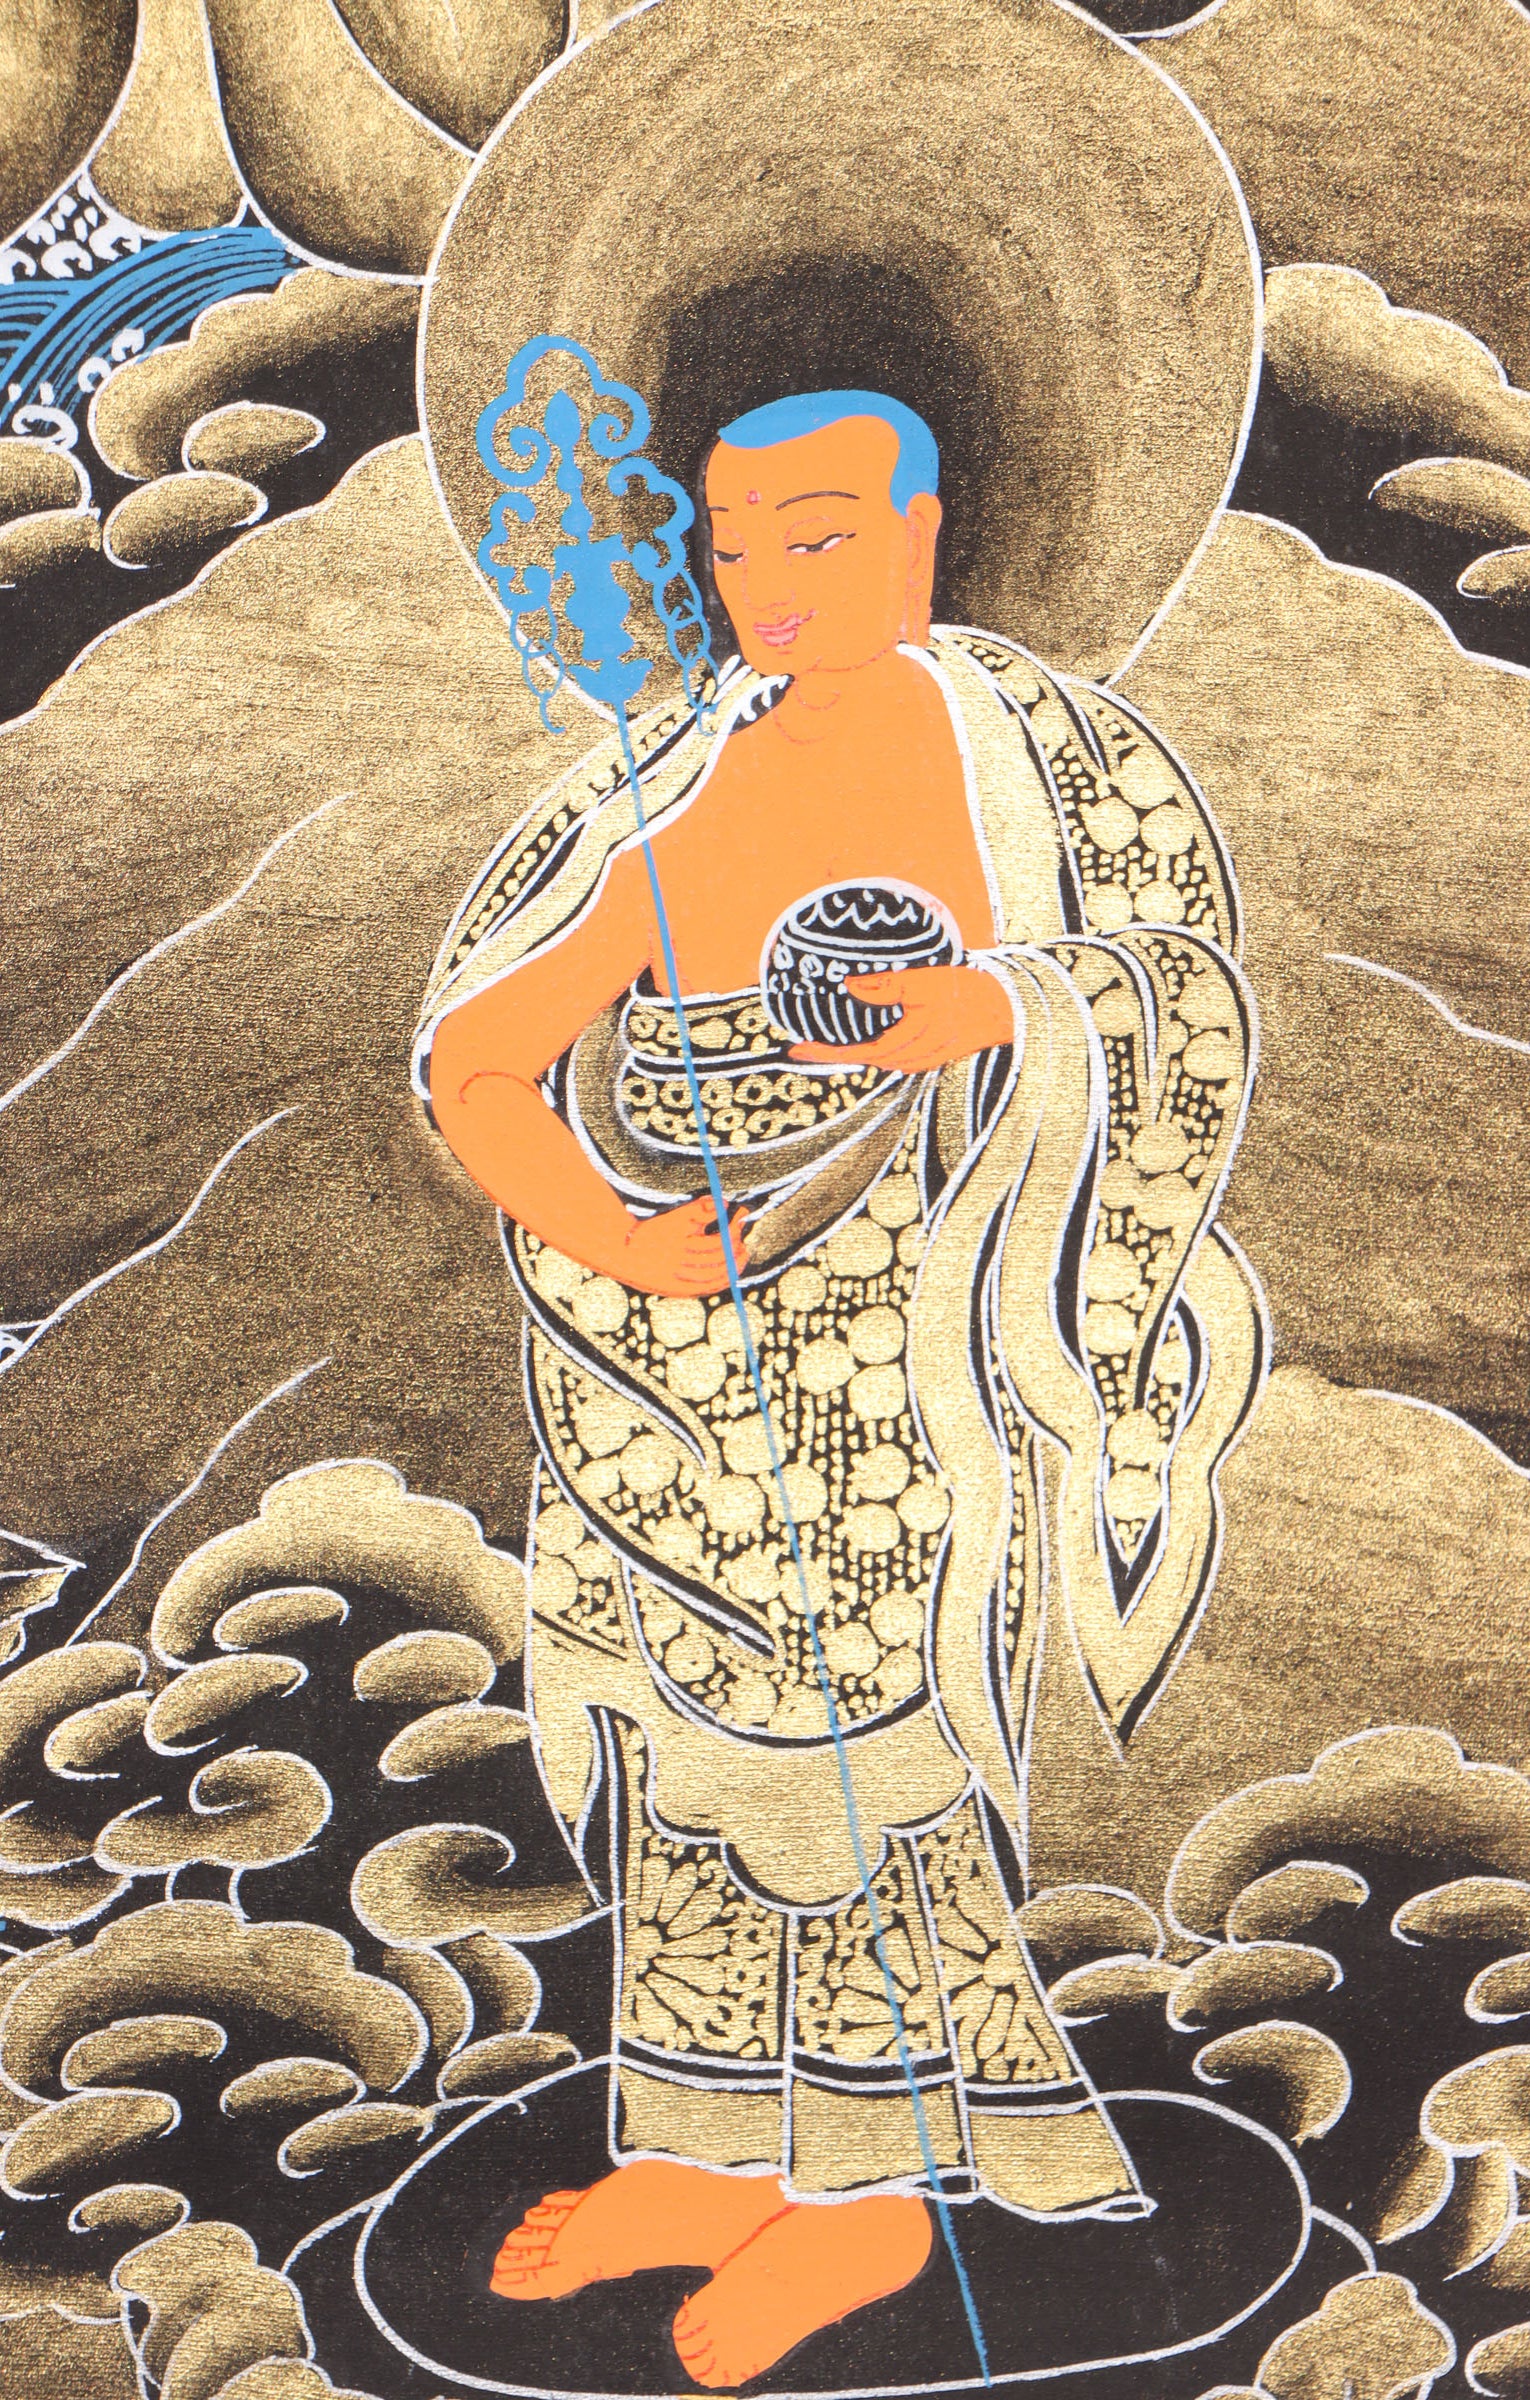 Shakyamuni Buddha Thangka for wall decor and enlightment.